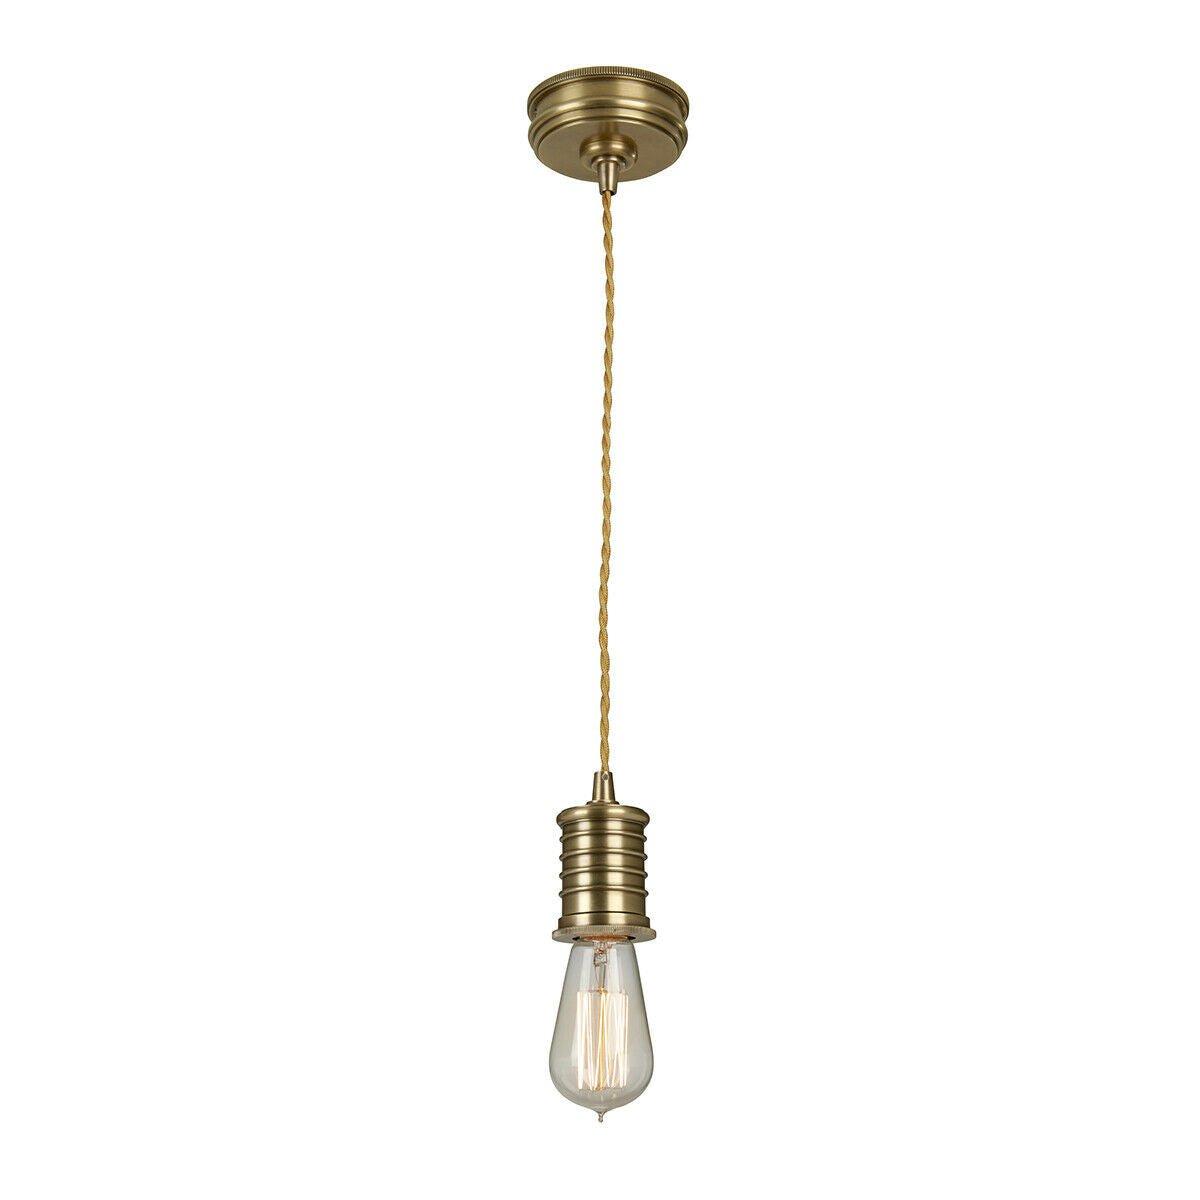 1 Bulb Ceiling Pendant Light Fitting Aged Brass Finish LED E27 60W Bulb